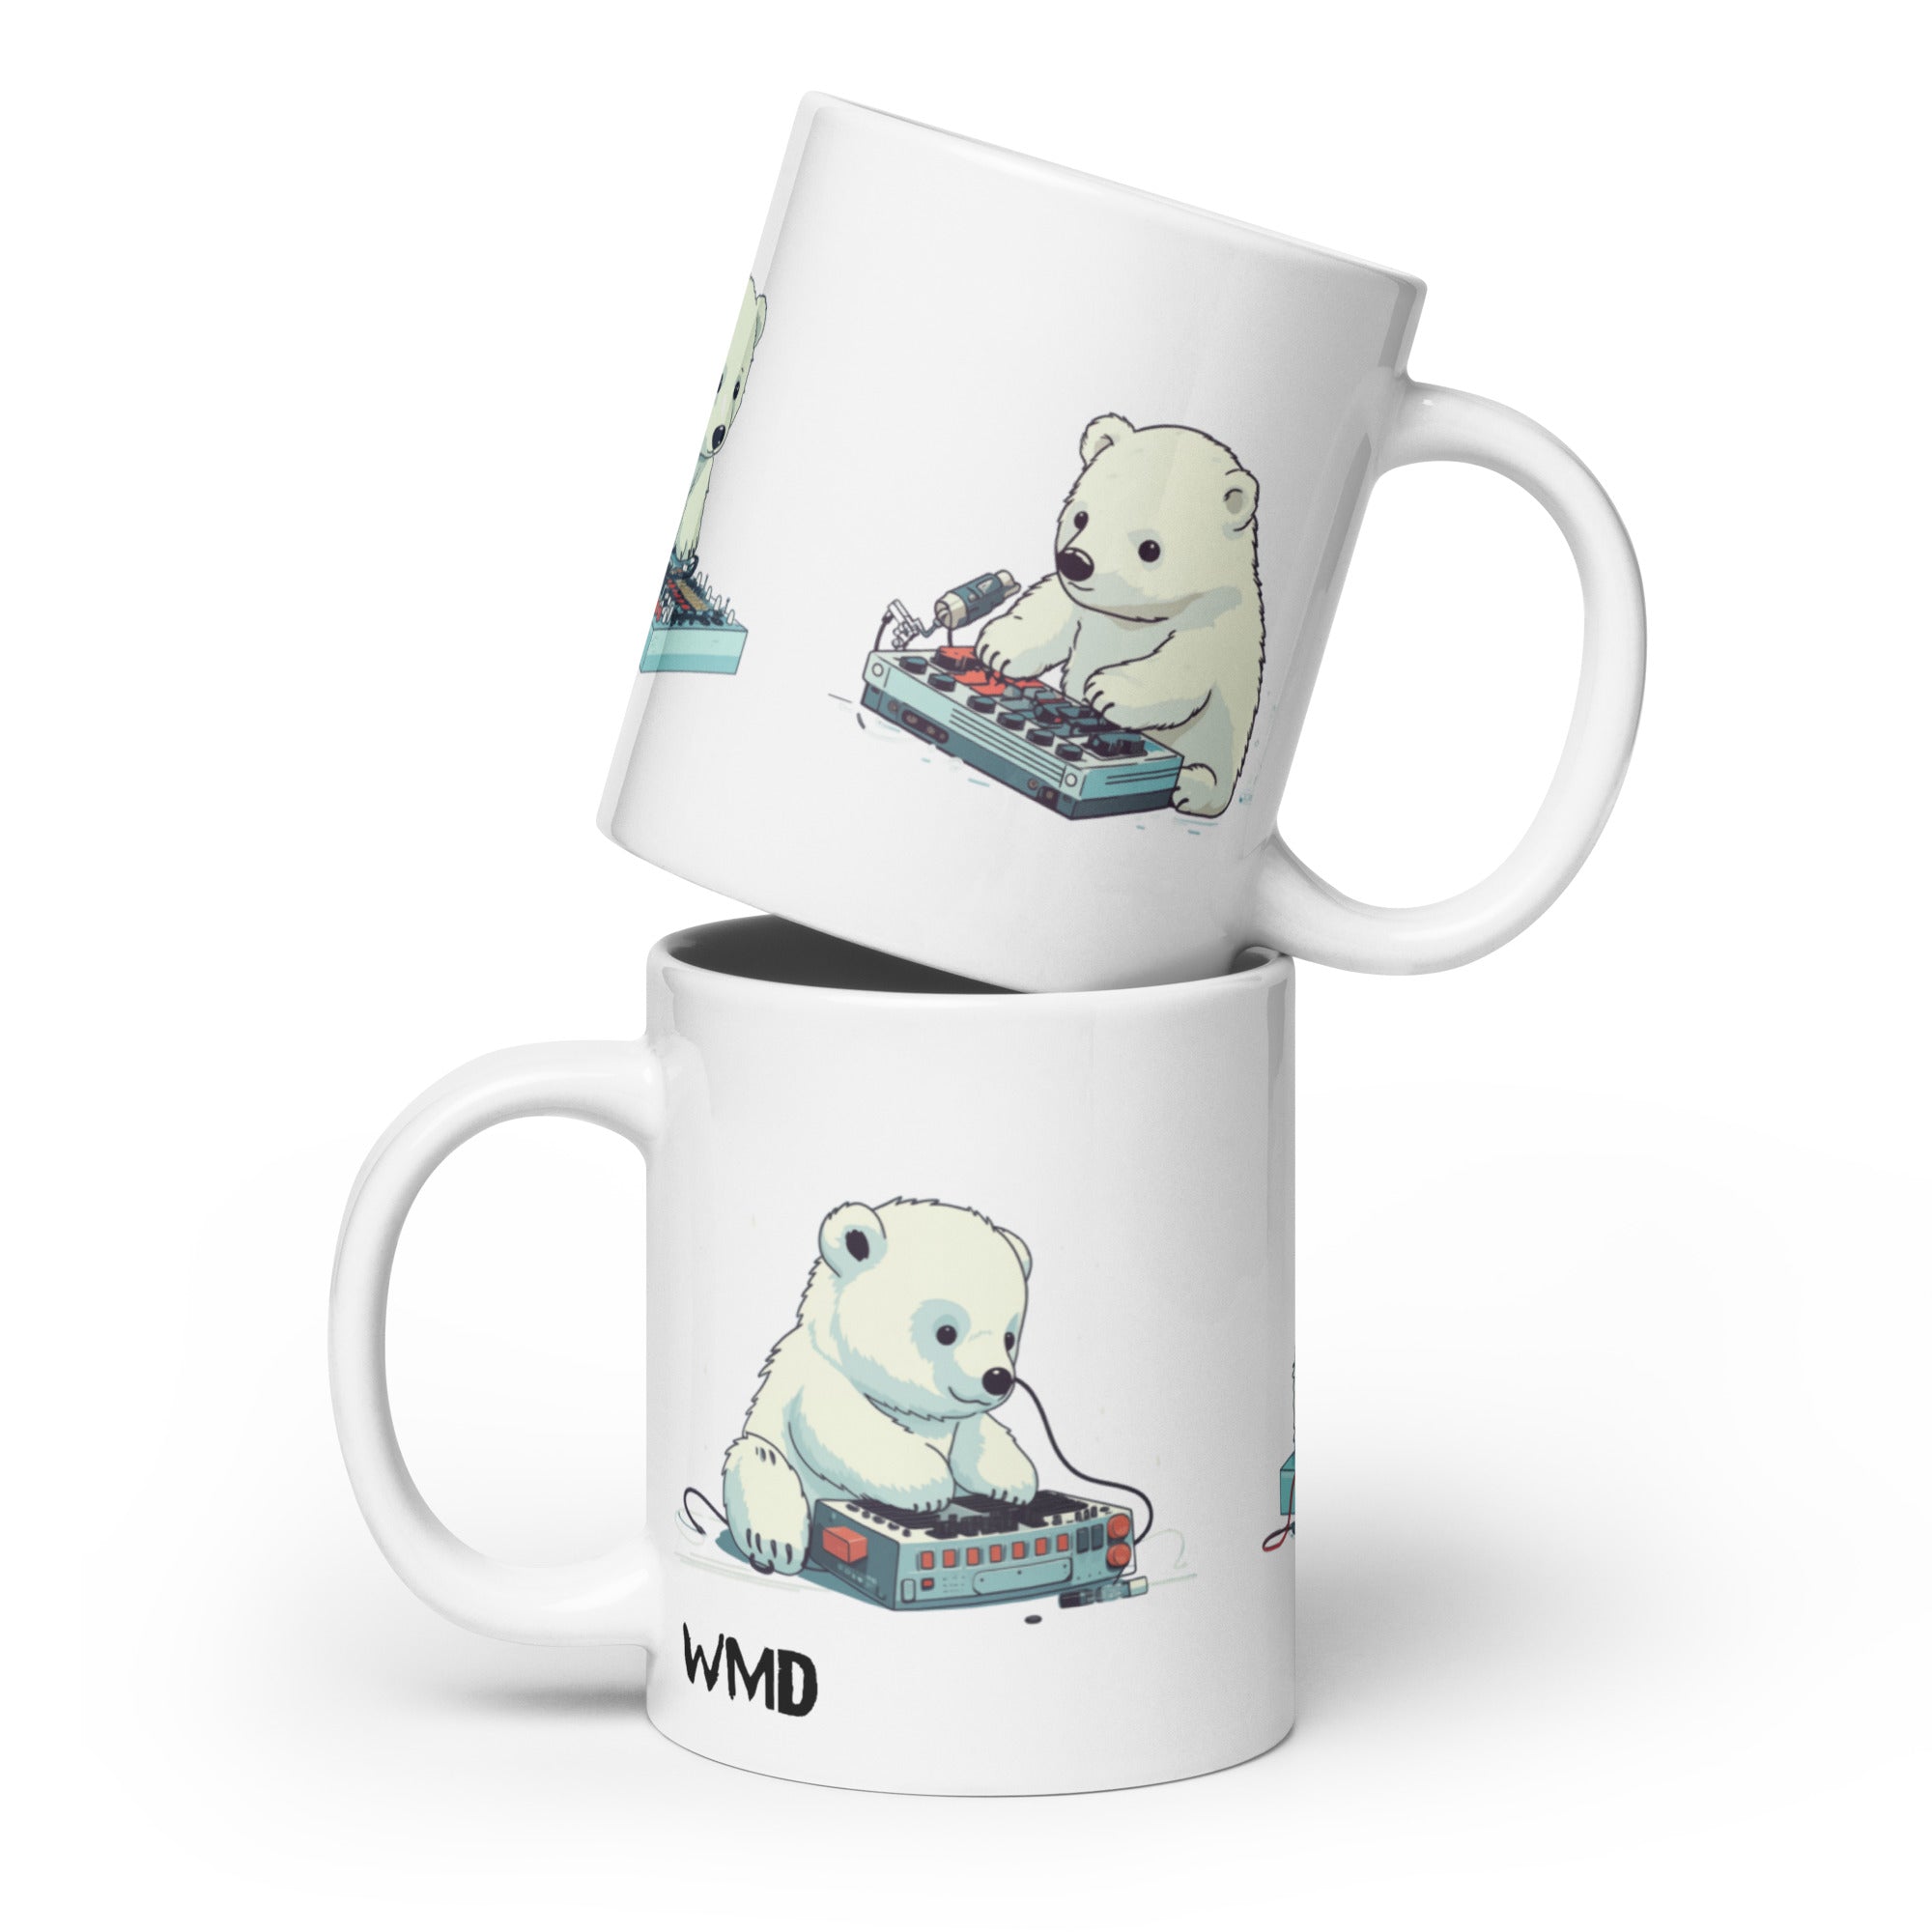 WMD - Mug - Learning to Patch Polarbears Mug - WMD - 20 oz - -